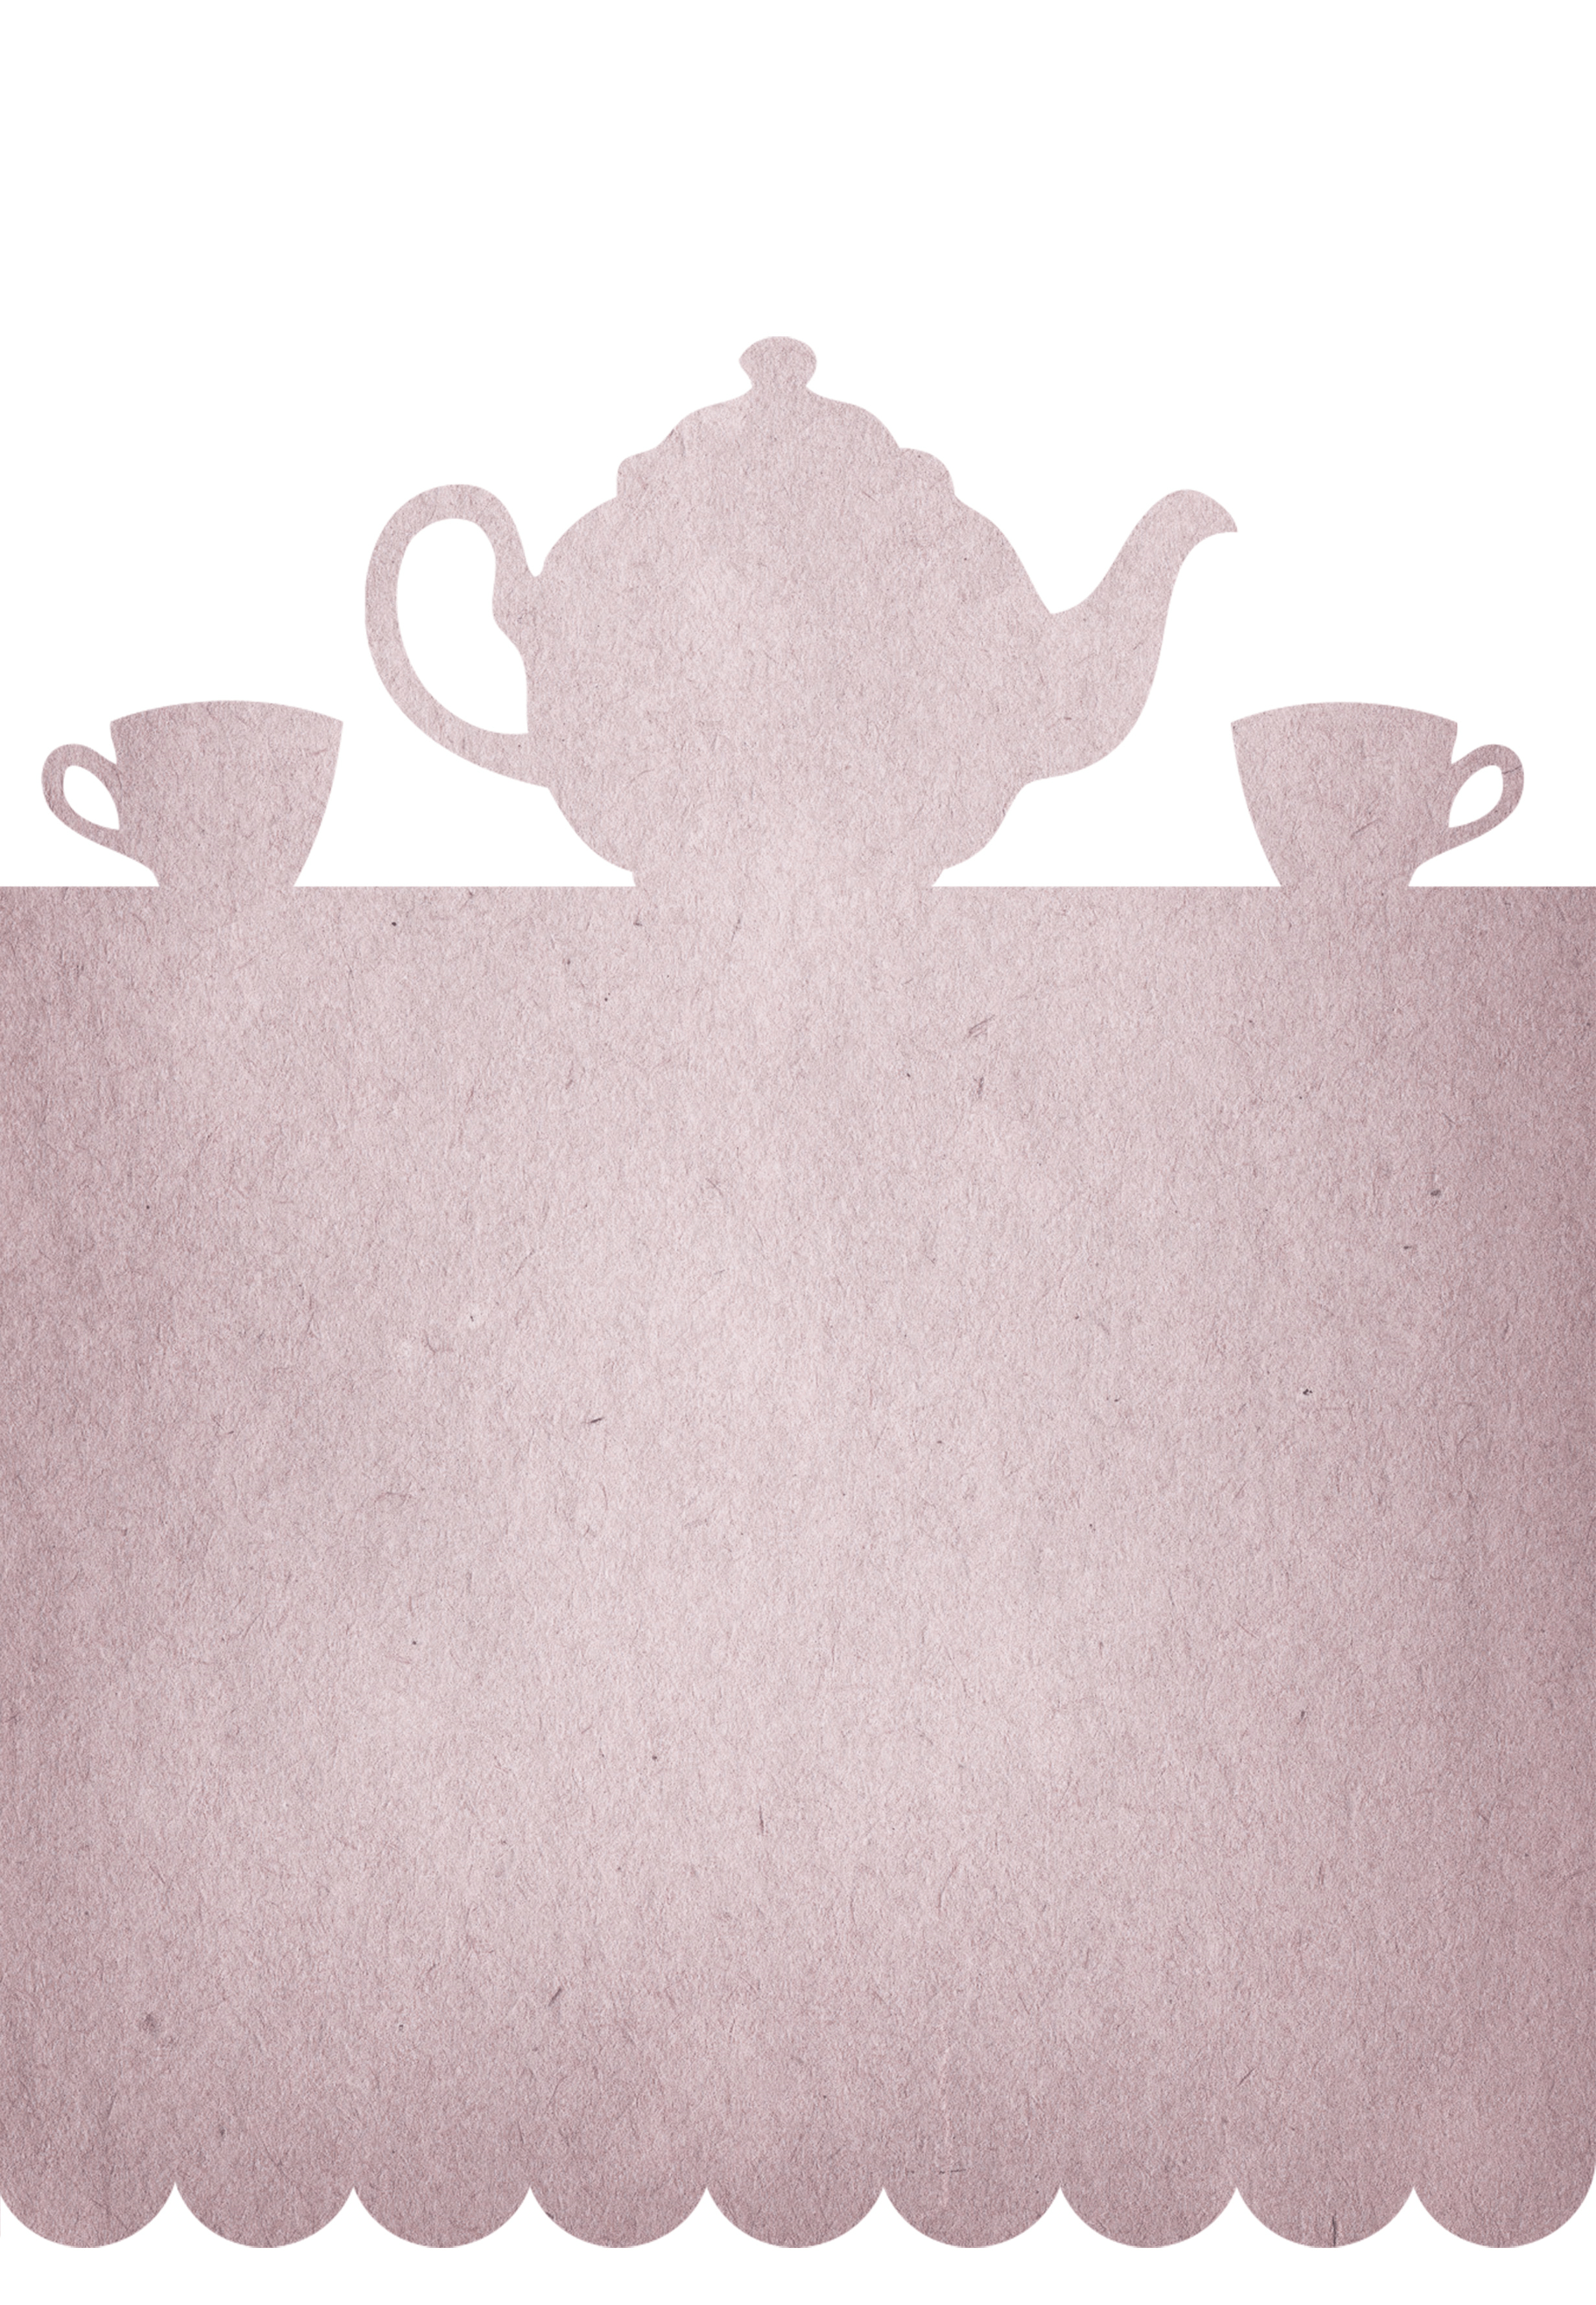 Tea Party - Free Printable Party Invitation Template | Greetings - Free Printable Kitchen Tea Invitation Templates